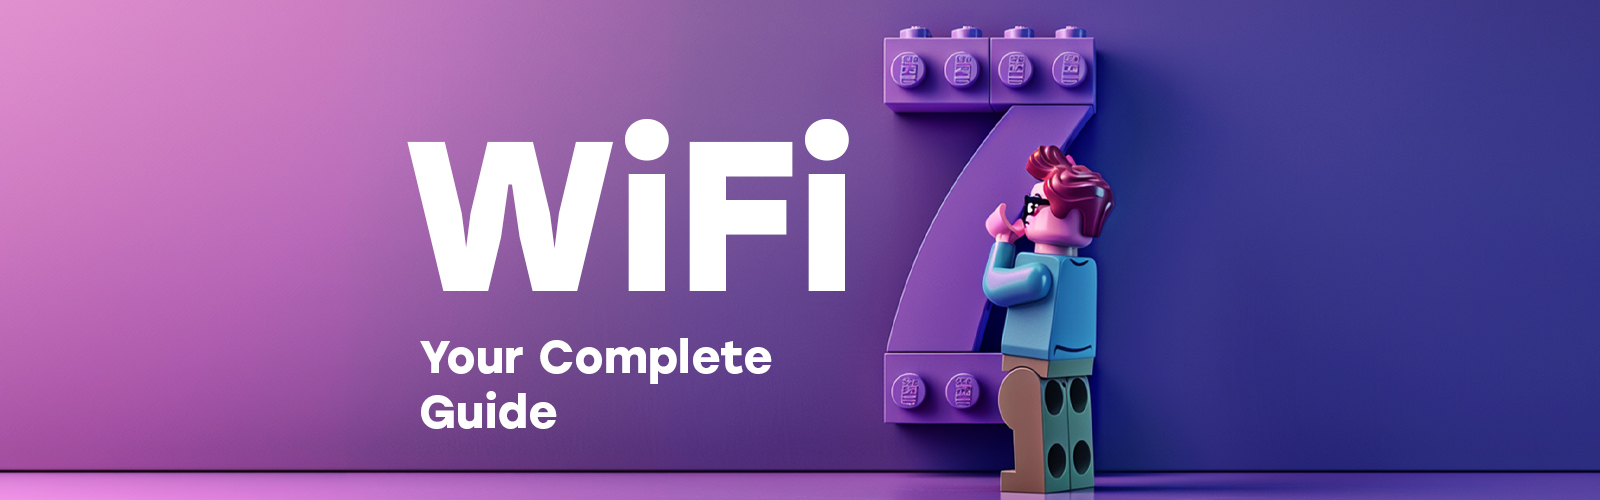 wifi-7-complete-guide